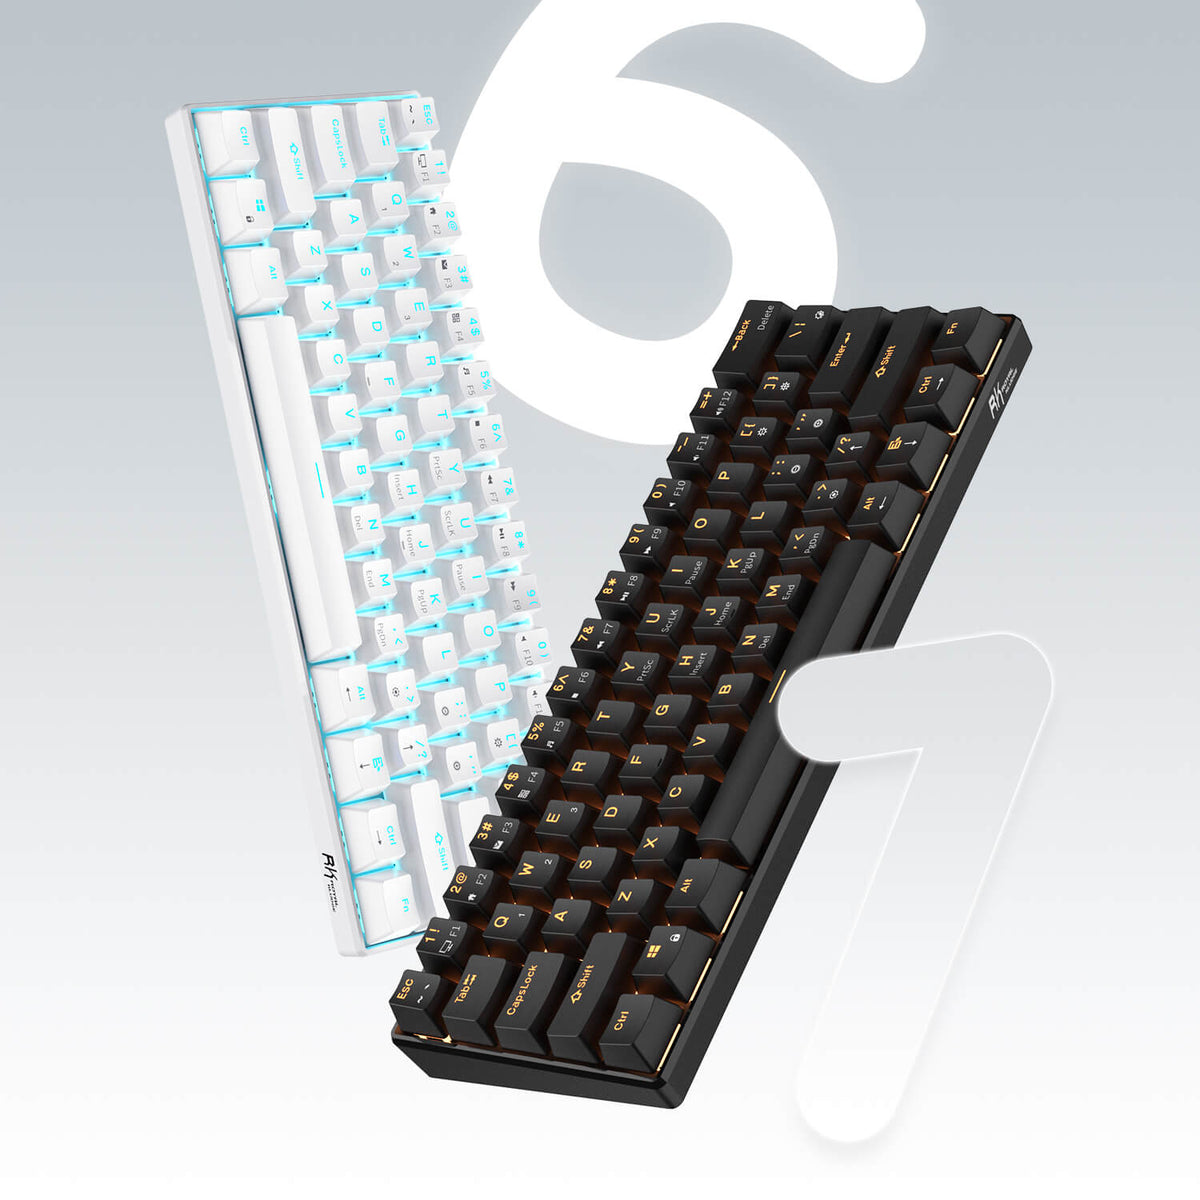 ROYAL KLUDGE RK61 60% White Wireless Mechanical Gaming Keyboard RKgaming